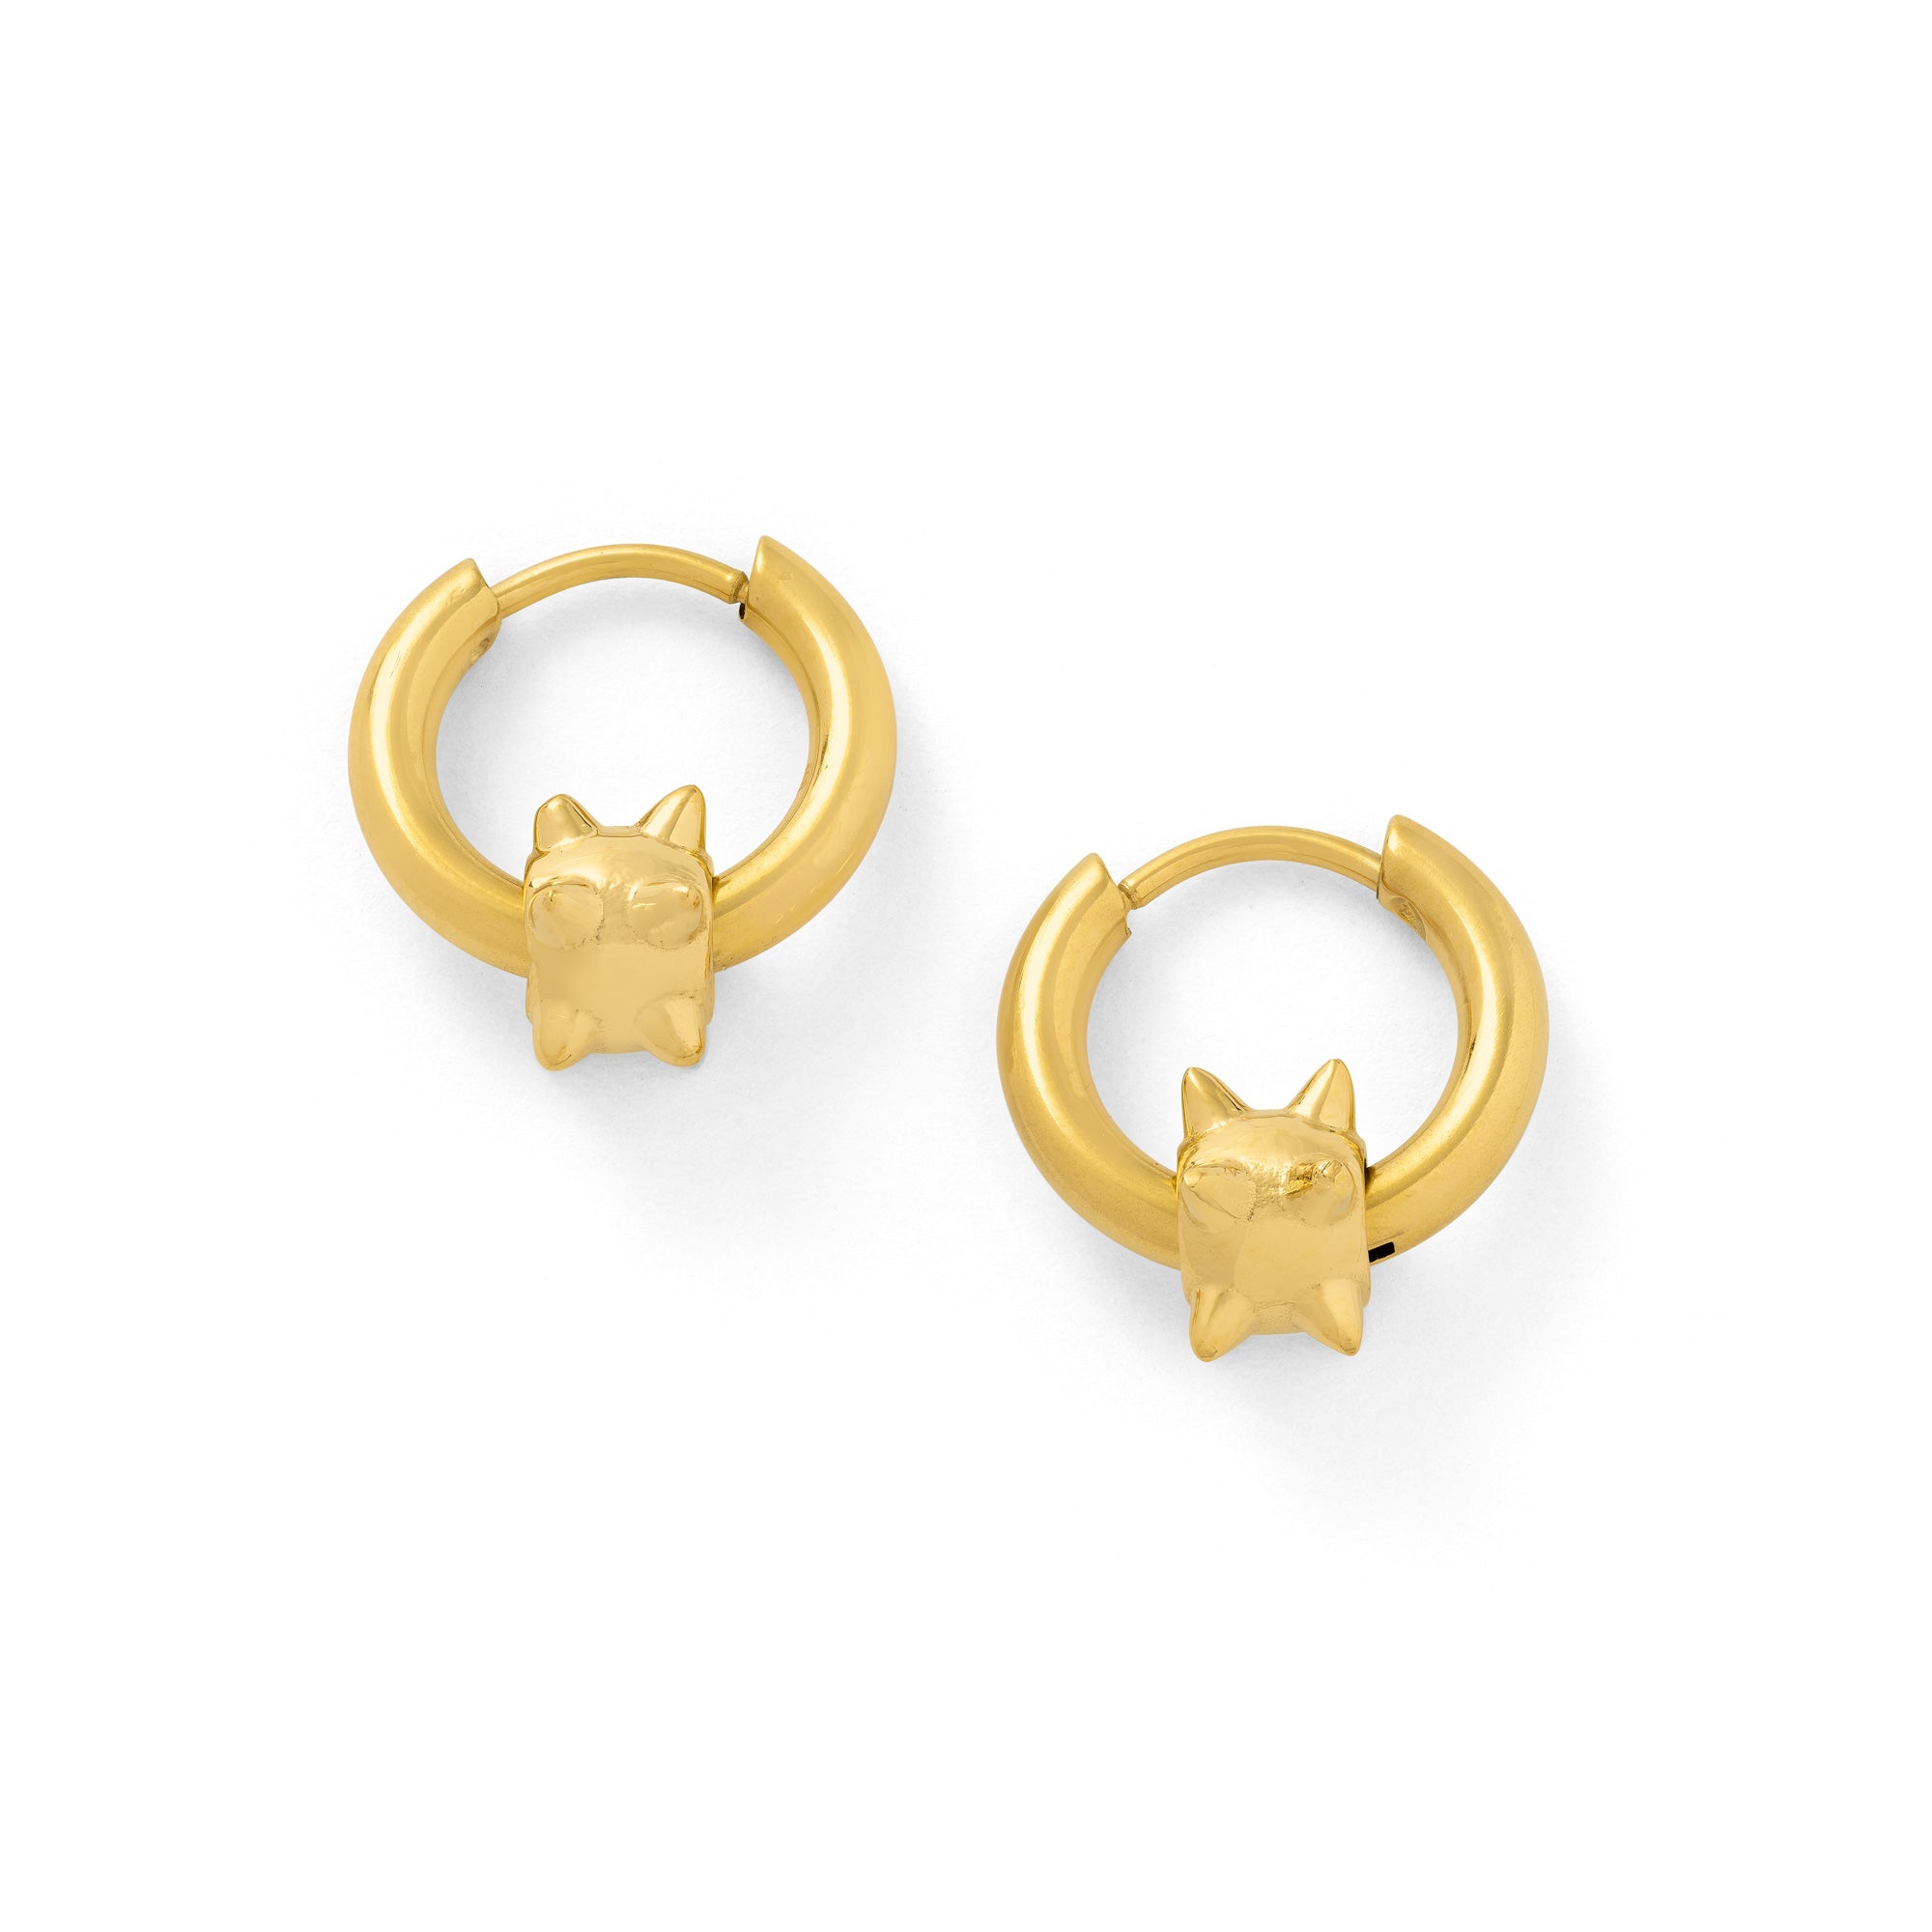 Gothic spiked ball earrings unisex 18k gold